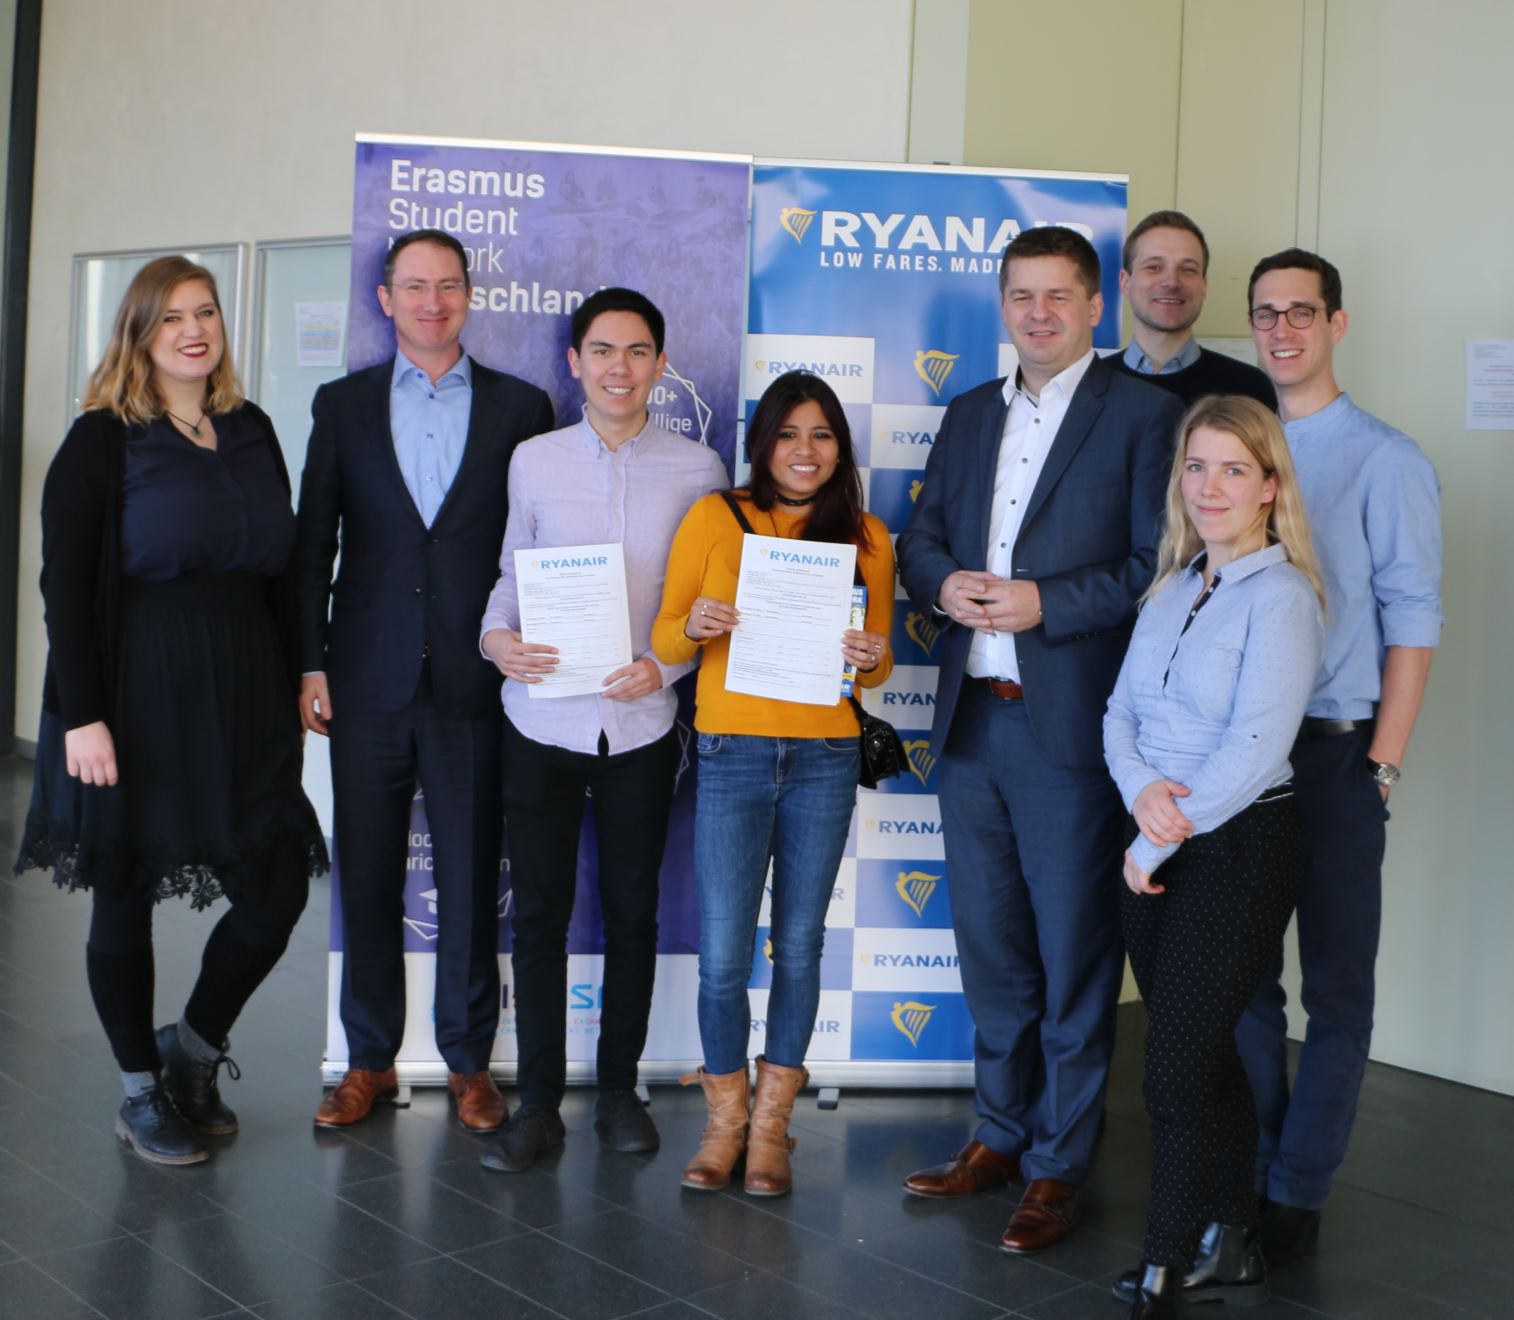 Ryanair Celebrates Over 250,000 Erasmus Student Network Bookings